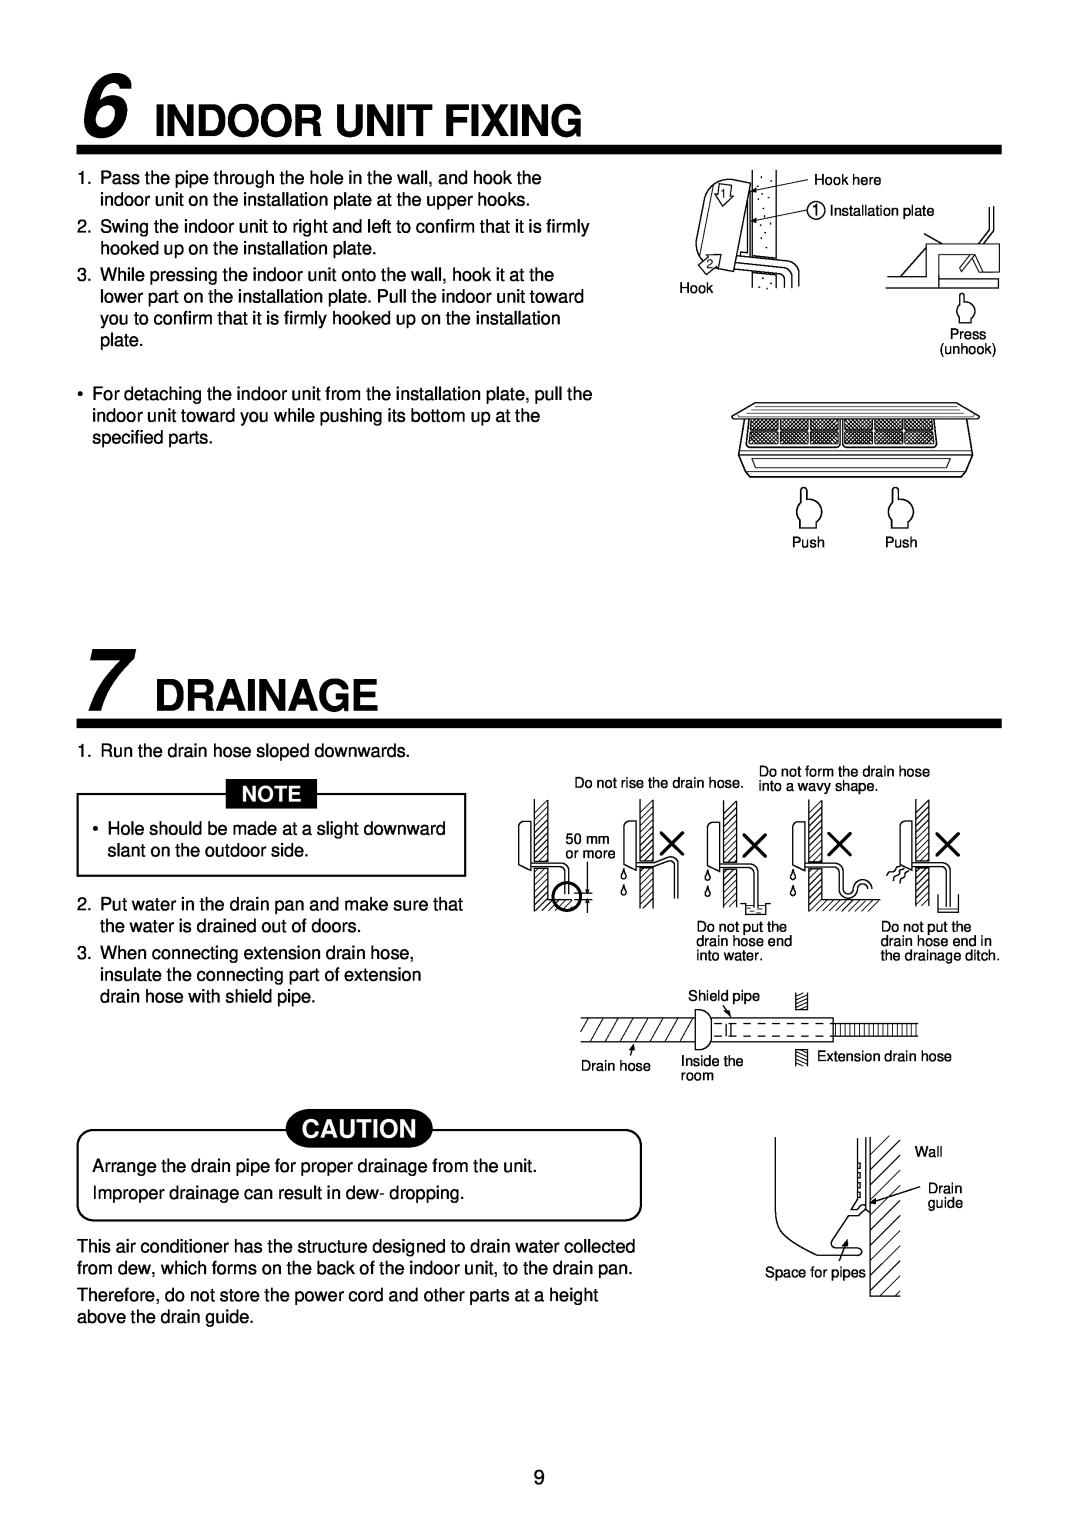 Toshiba MMK-AP0122H, MMK-AP0072H, MMK-AP0092H installation manual Indoor Unit Fixing, Drainage 